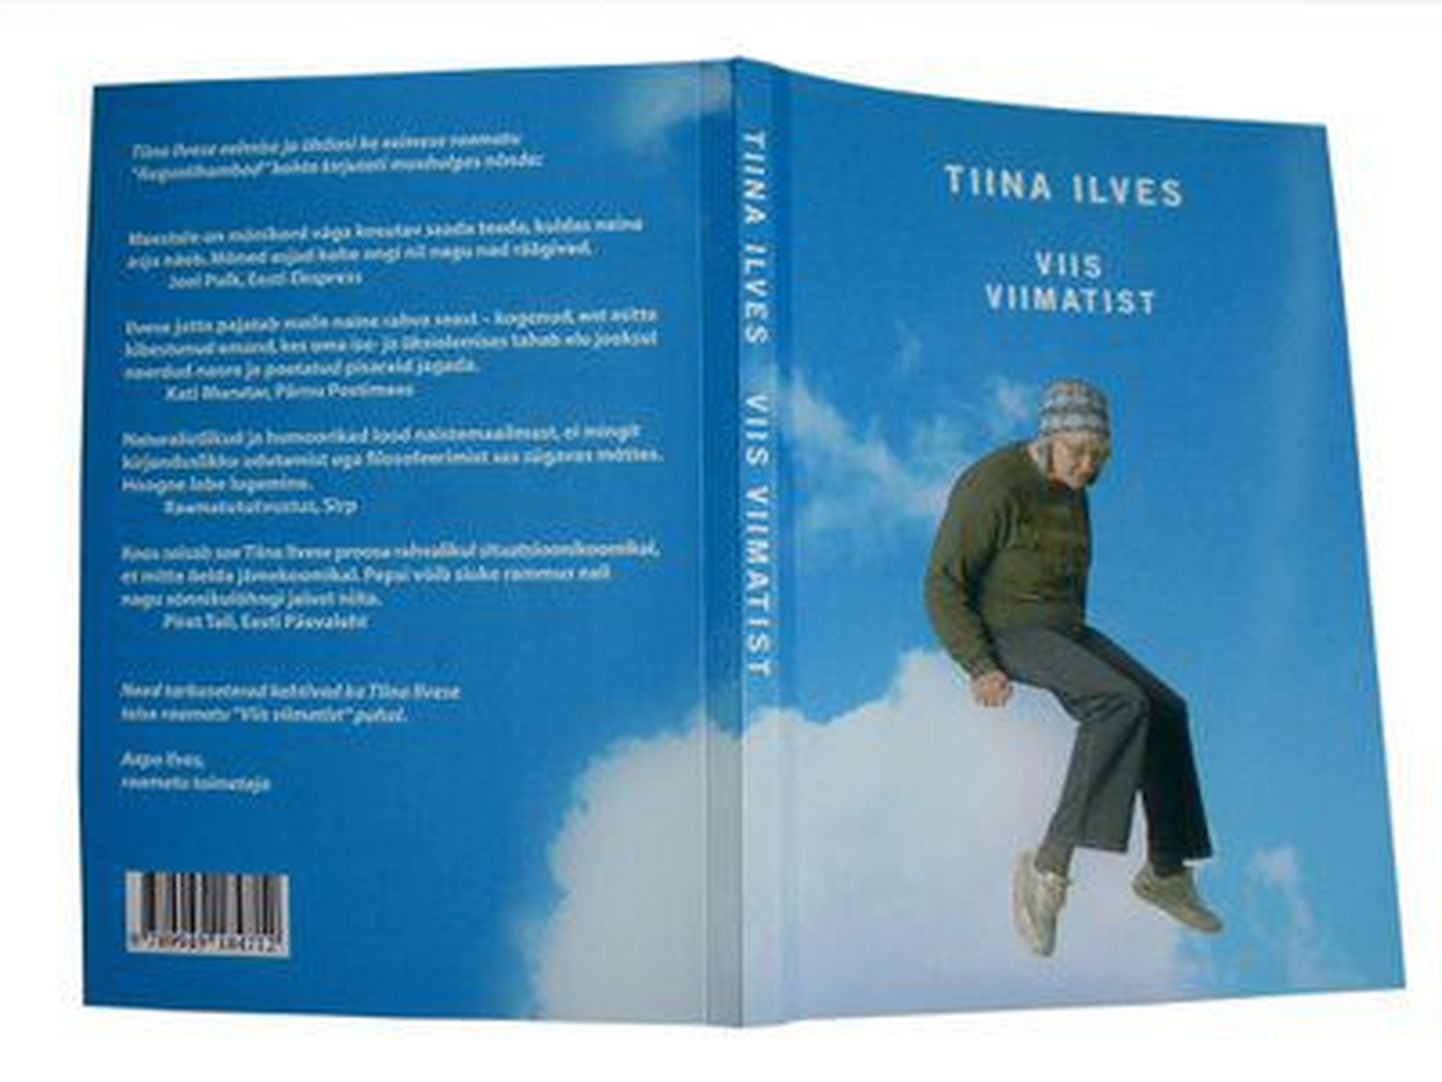 Tiina Ilvese raamat "Viis viimatist".